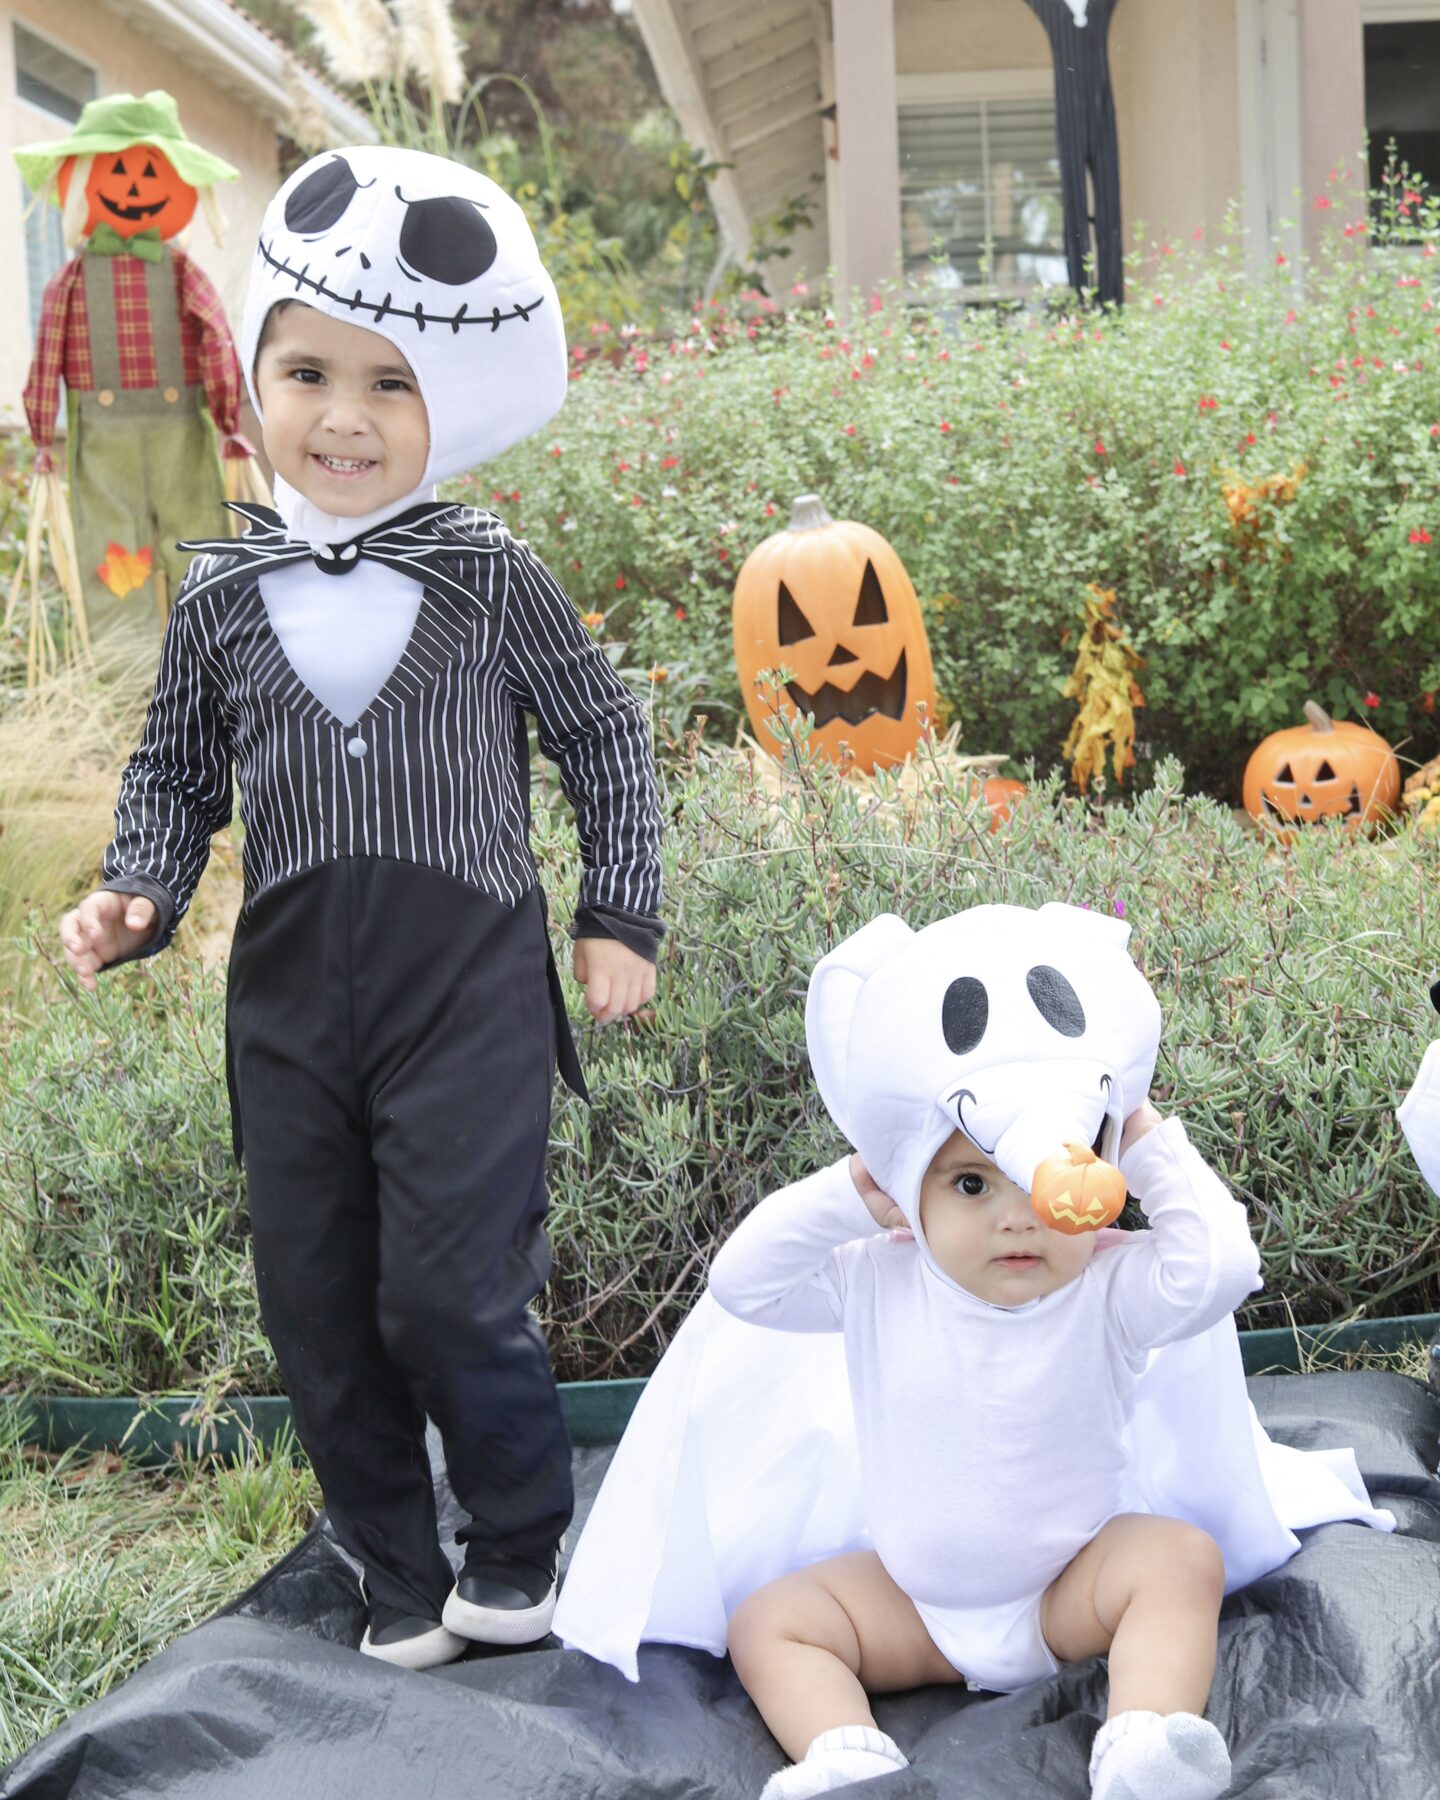 Halloween costume ideas for kids, baby costume idea, Nightmare before Christmas costume idea